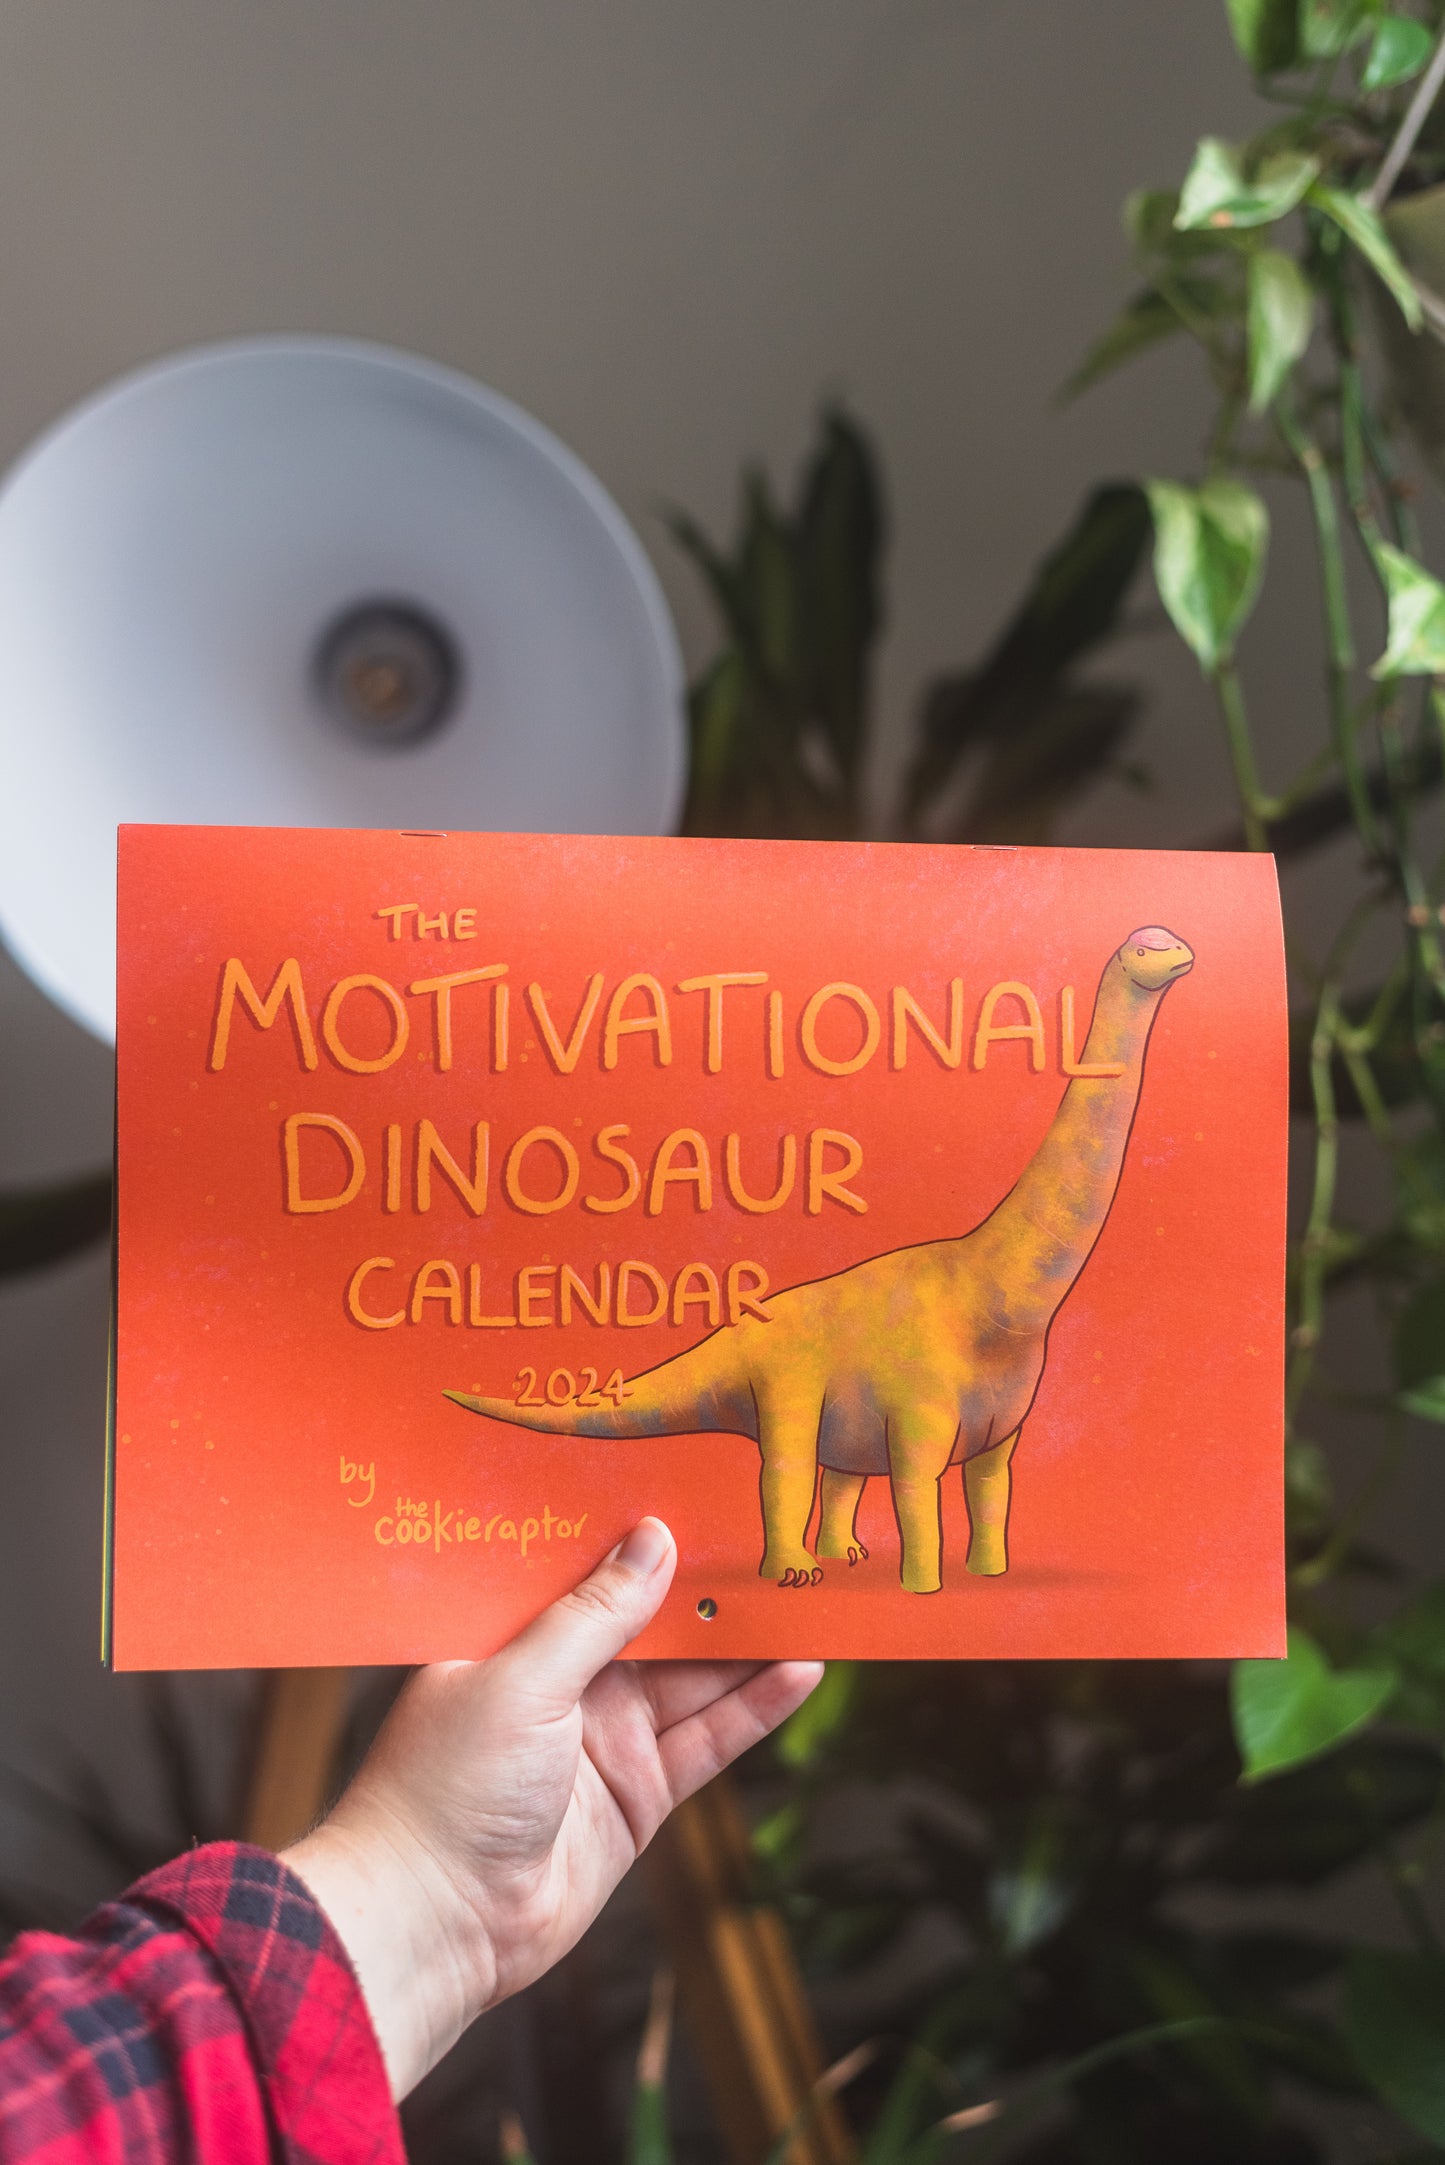 The Motivational Dinosaur Calendar 2024